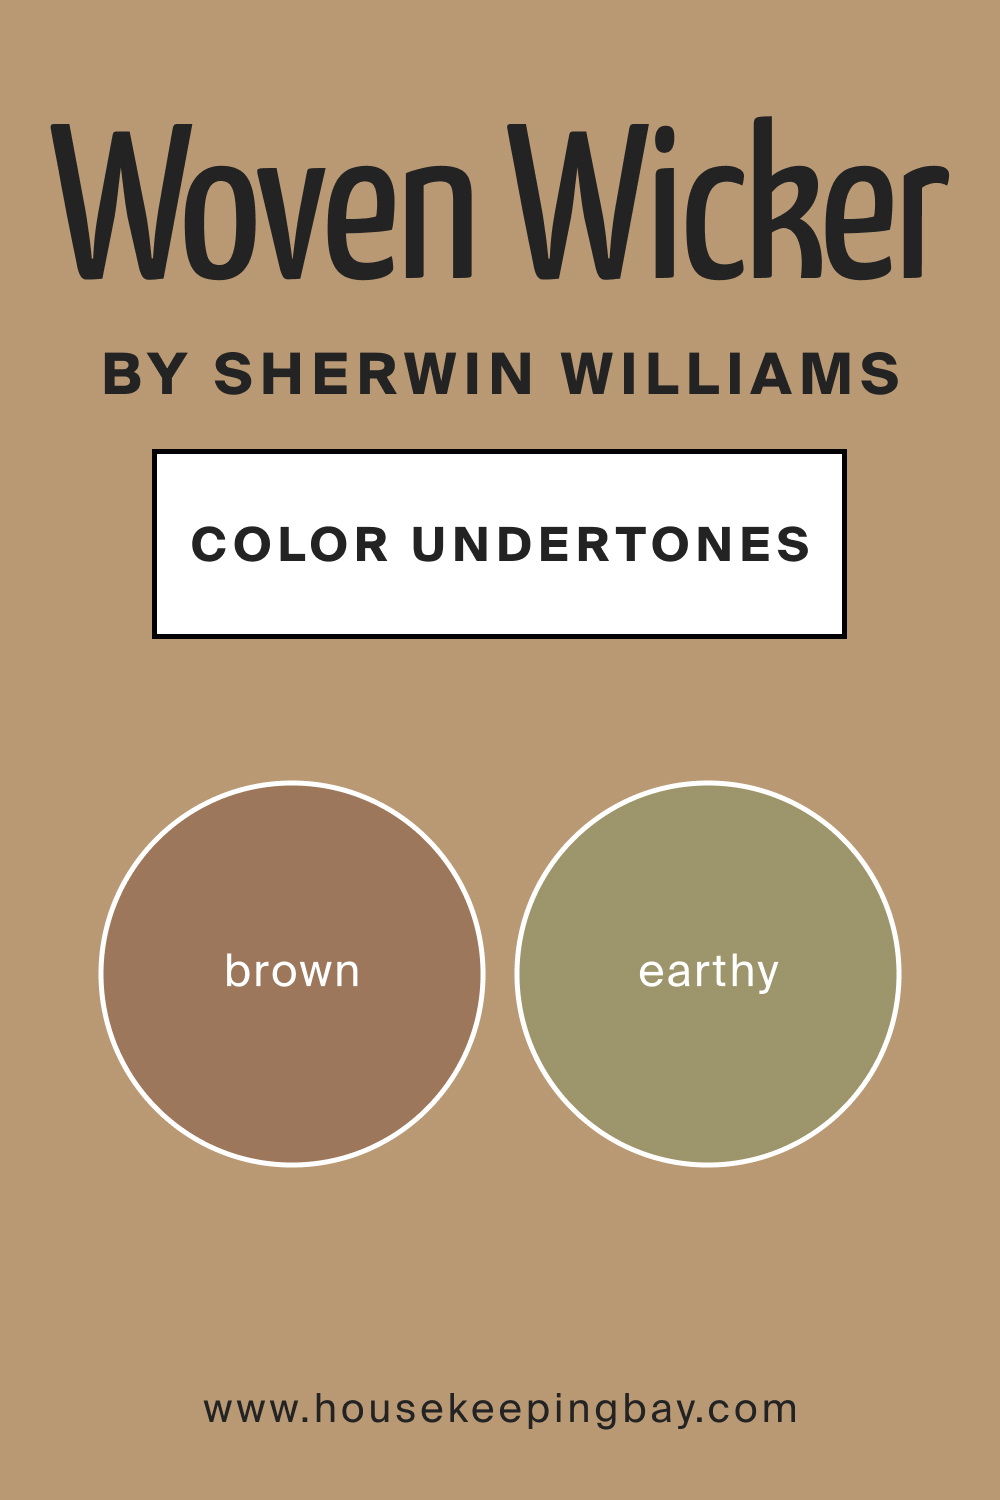 SW 9104 Woven Wicker by Sherwin Williams Color Undertone